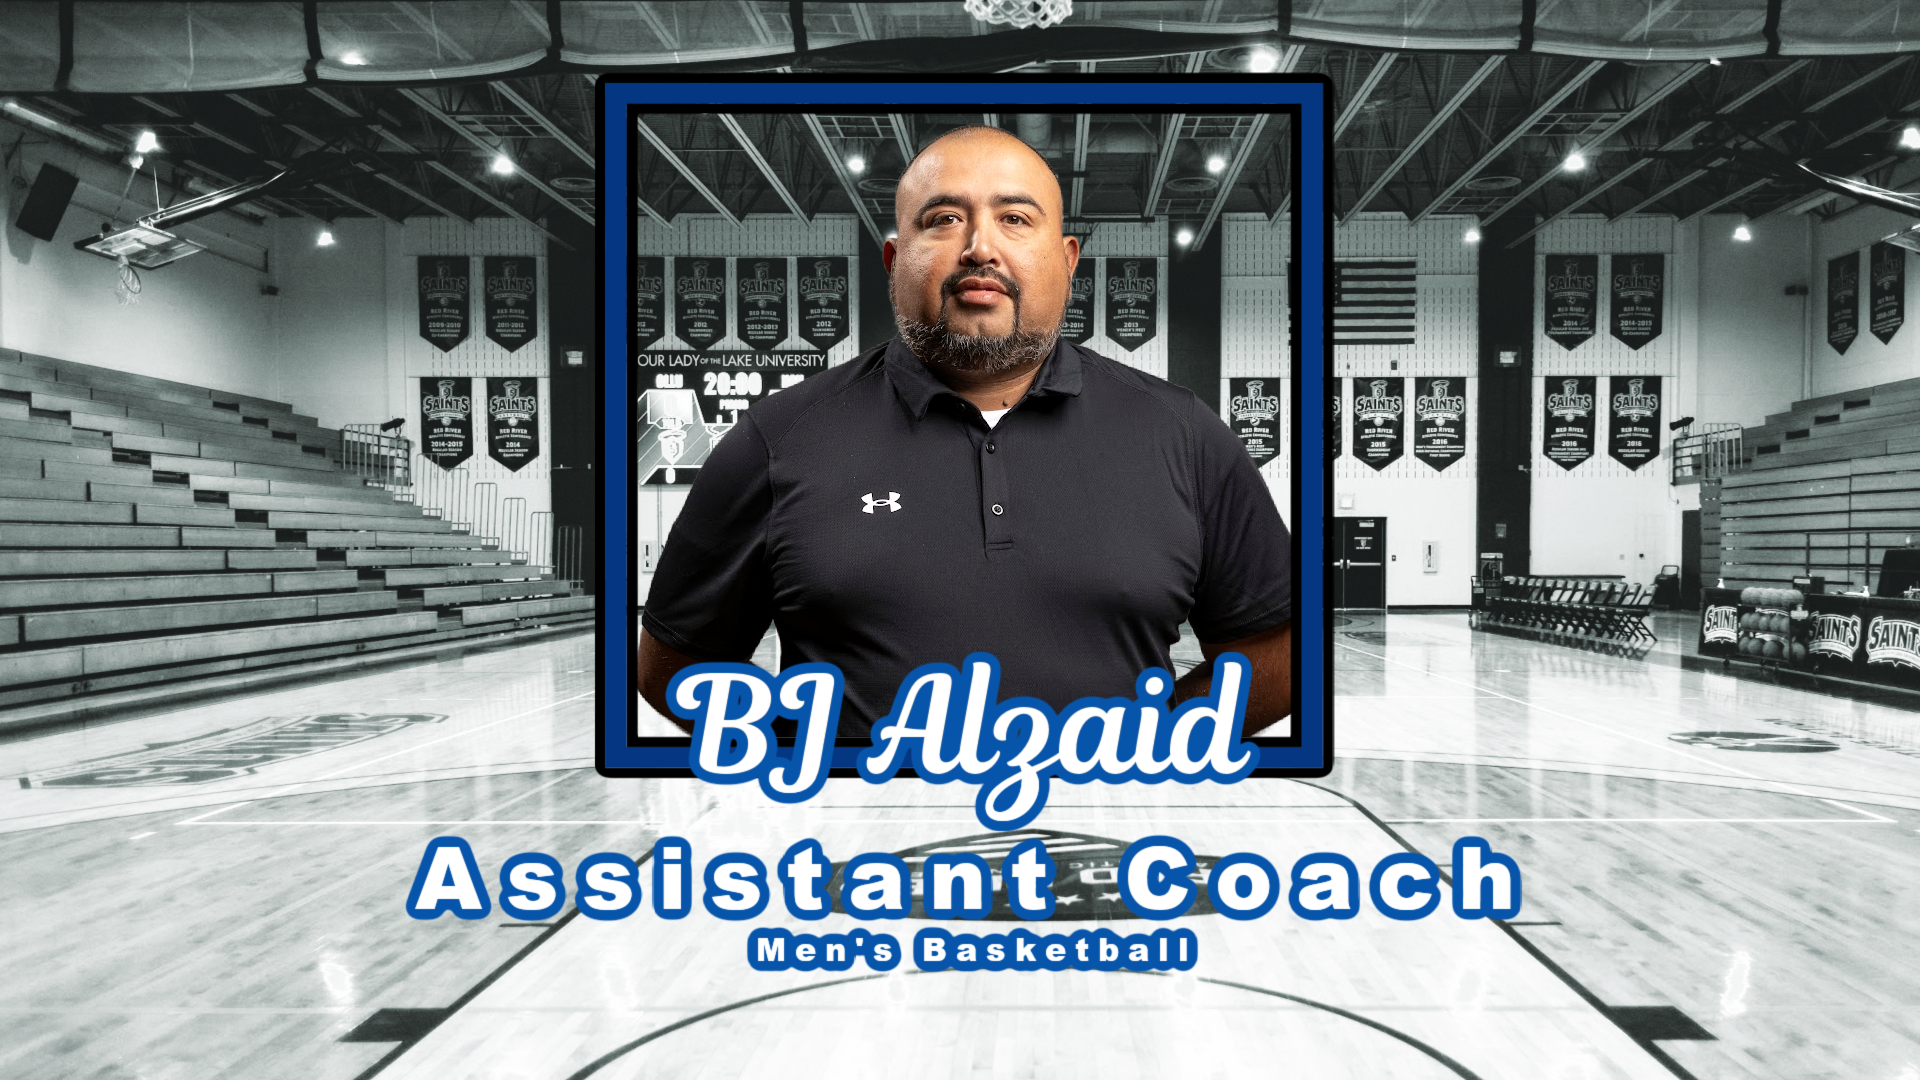 OLLU Names Byriq "BJ" Alzaid Full-Time Assistant Coach for Men's Basketball